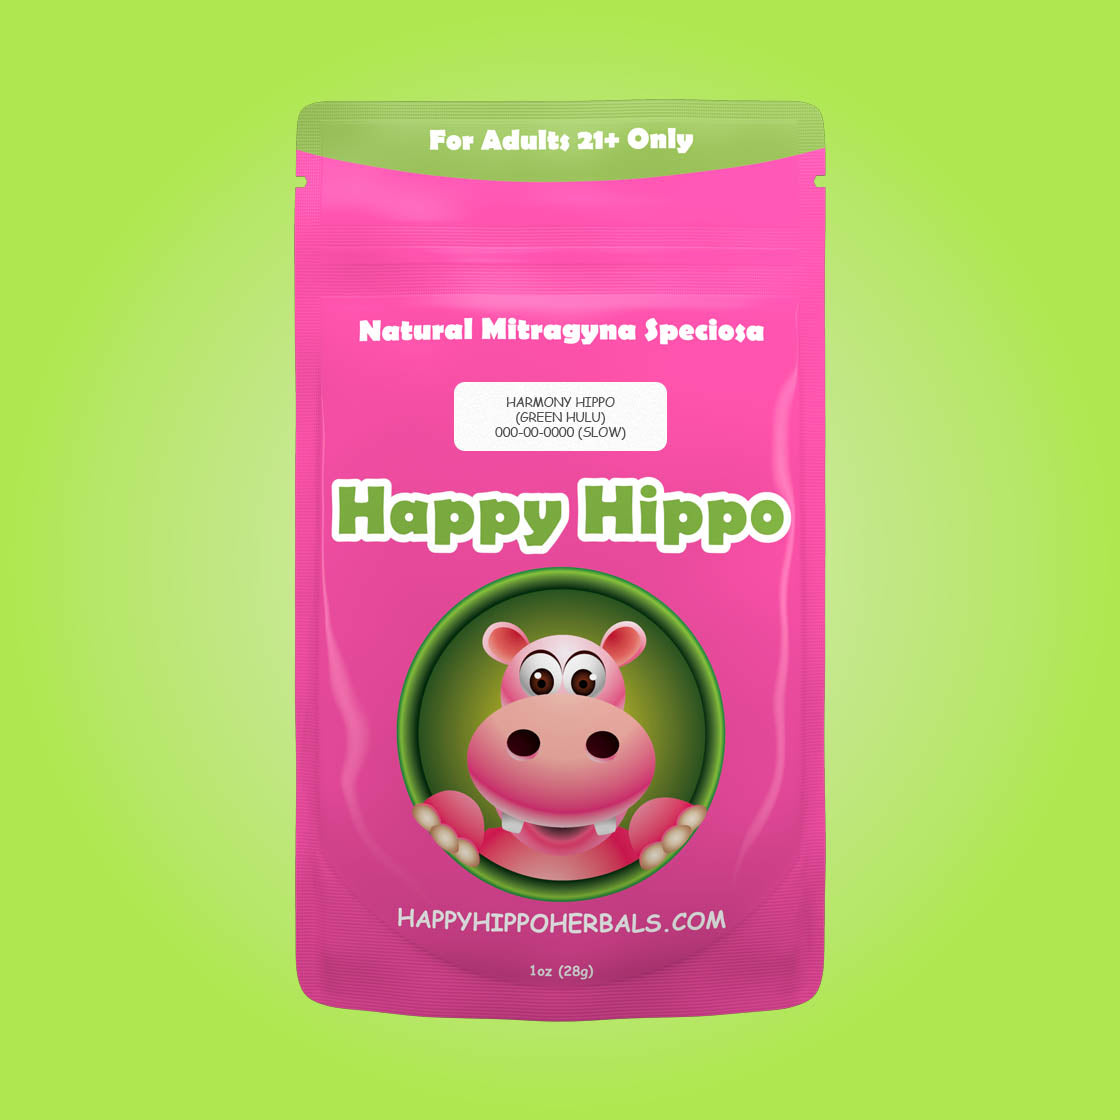 Product Image depicting a 1oz bag of Happy Hippo Green Vein Hulu Kratom Powder (Mitragyna Speciosa).